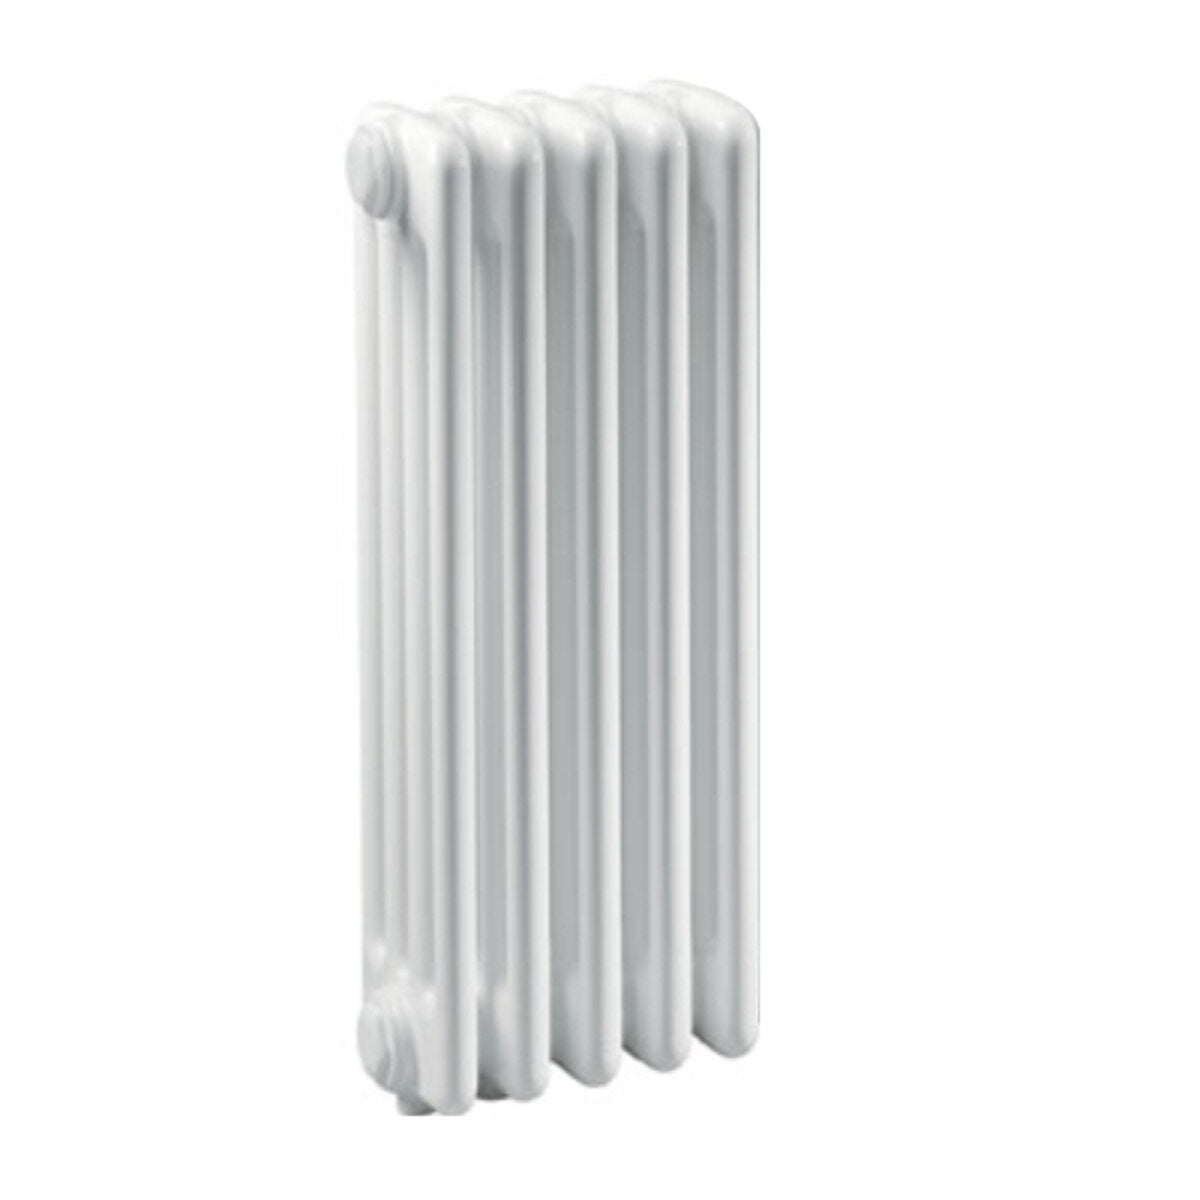 Ercos Comby steel column radiator 5 elements 3 columns center distance 1735 mm